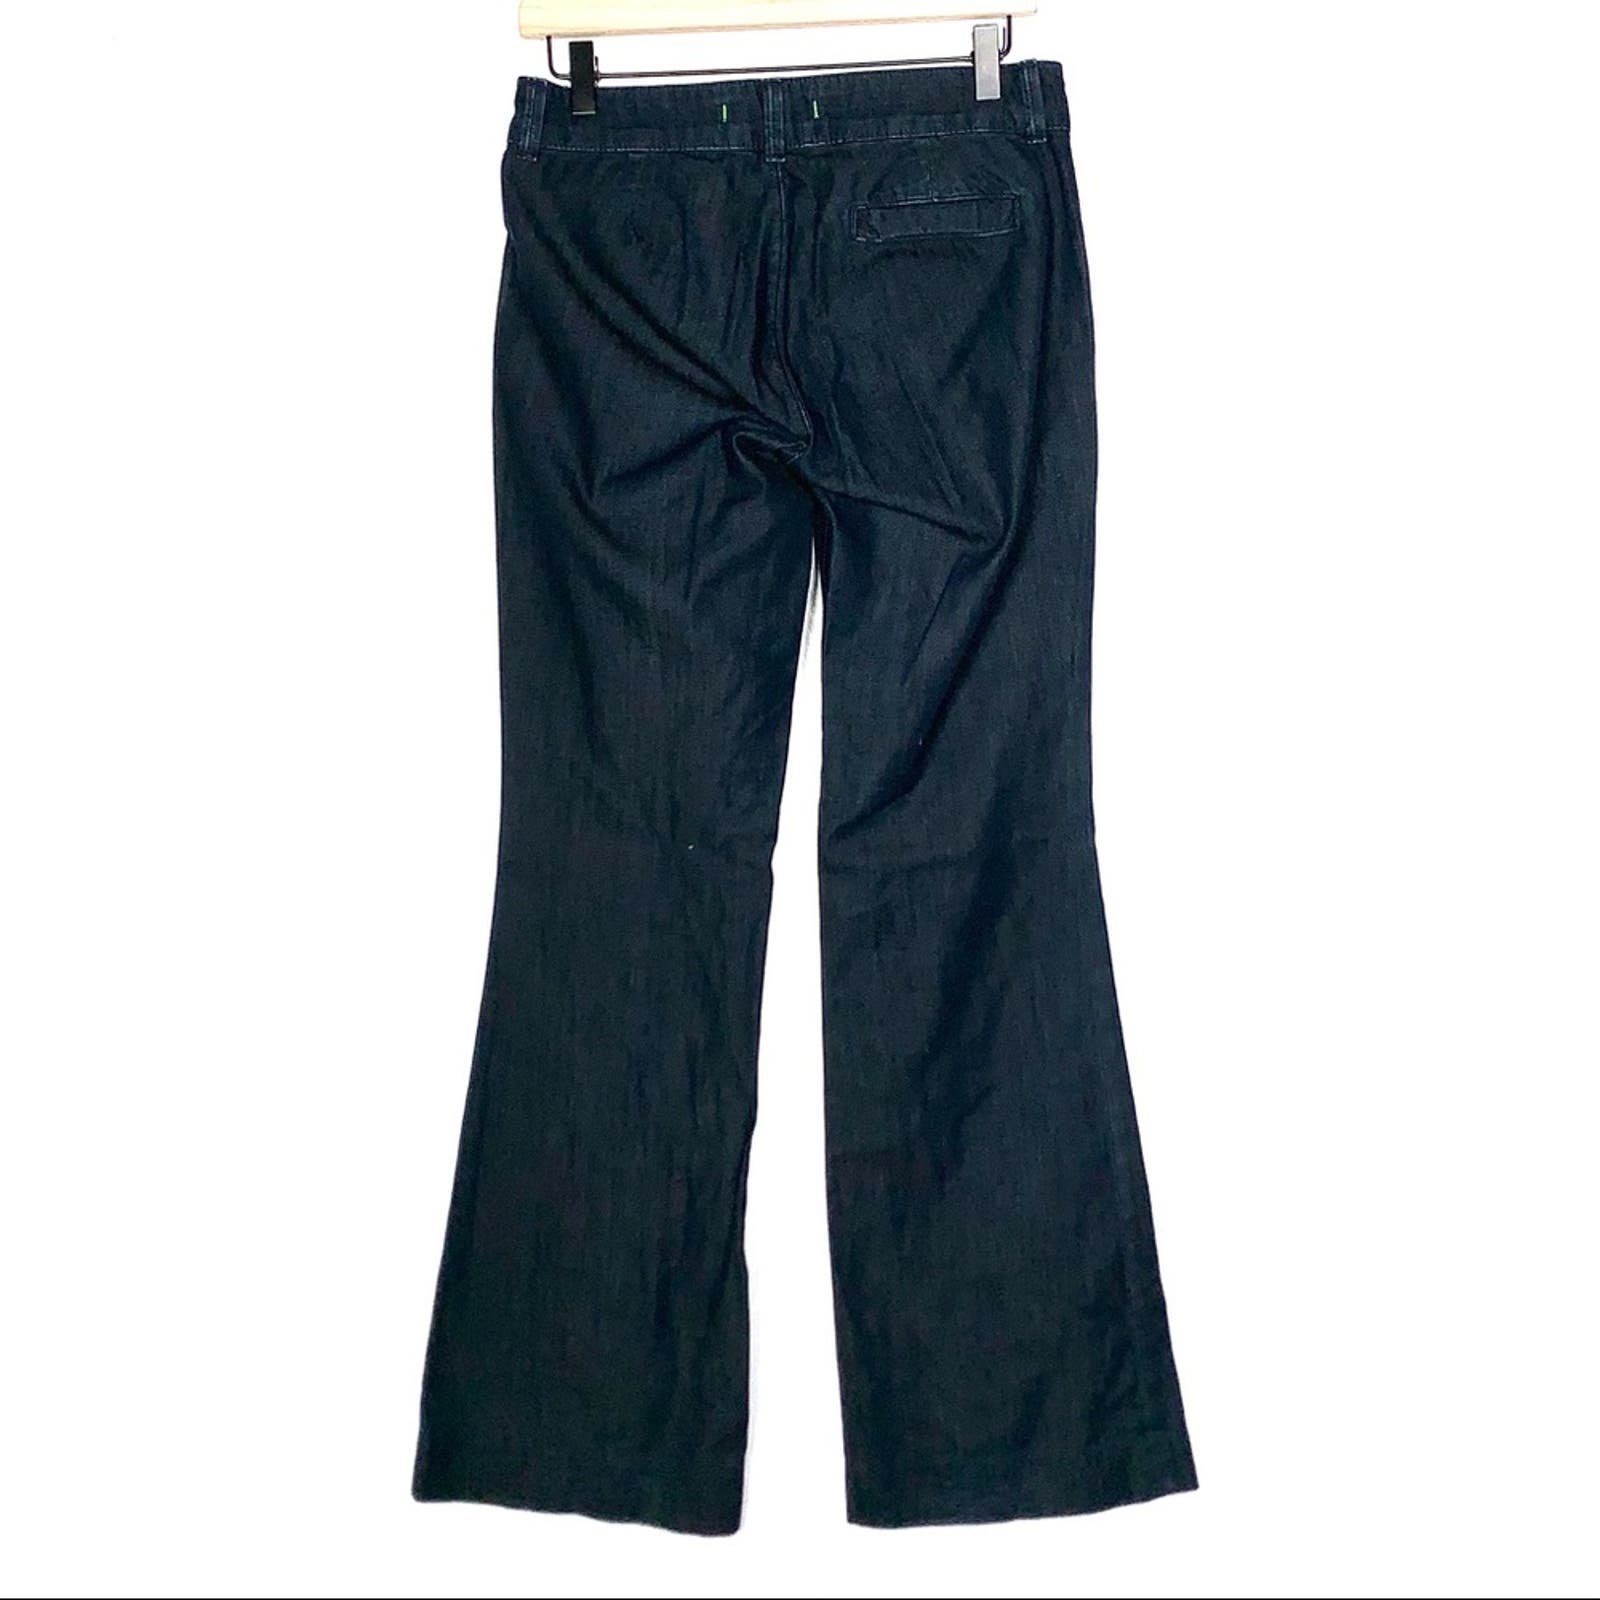 Buy J Brand dark wash mid rise bell bottom trouser jeans size 26 g3KMc8PwL just buy it